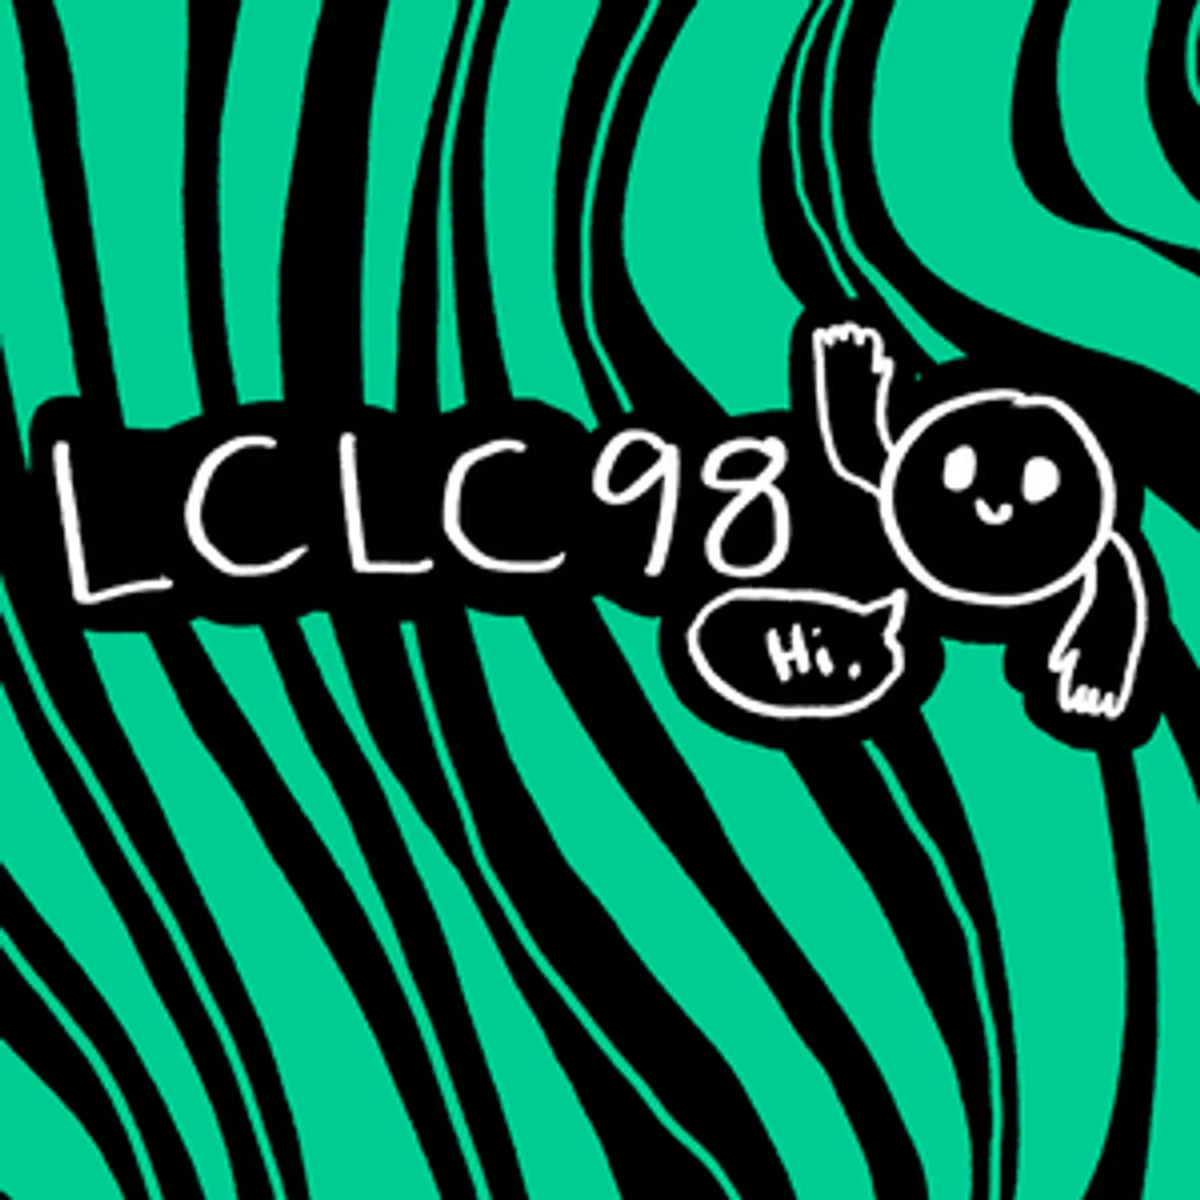 lclc98